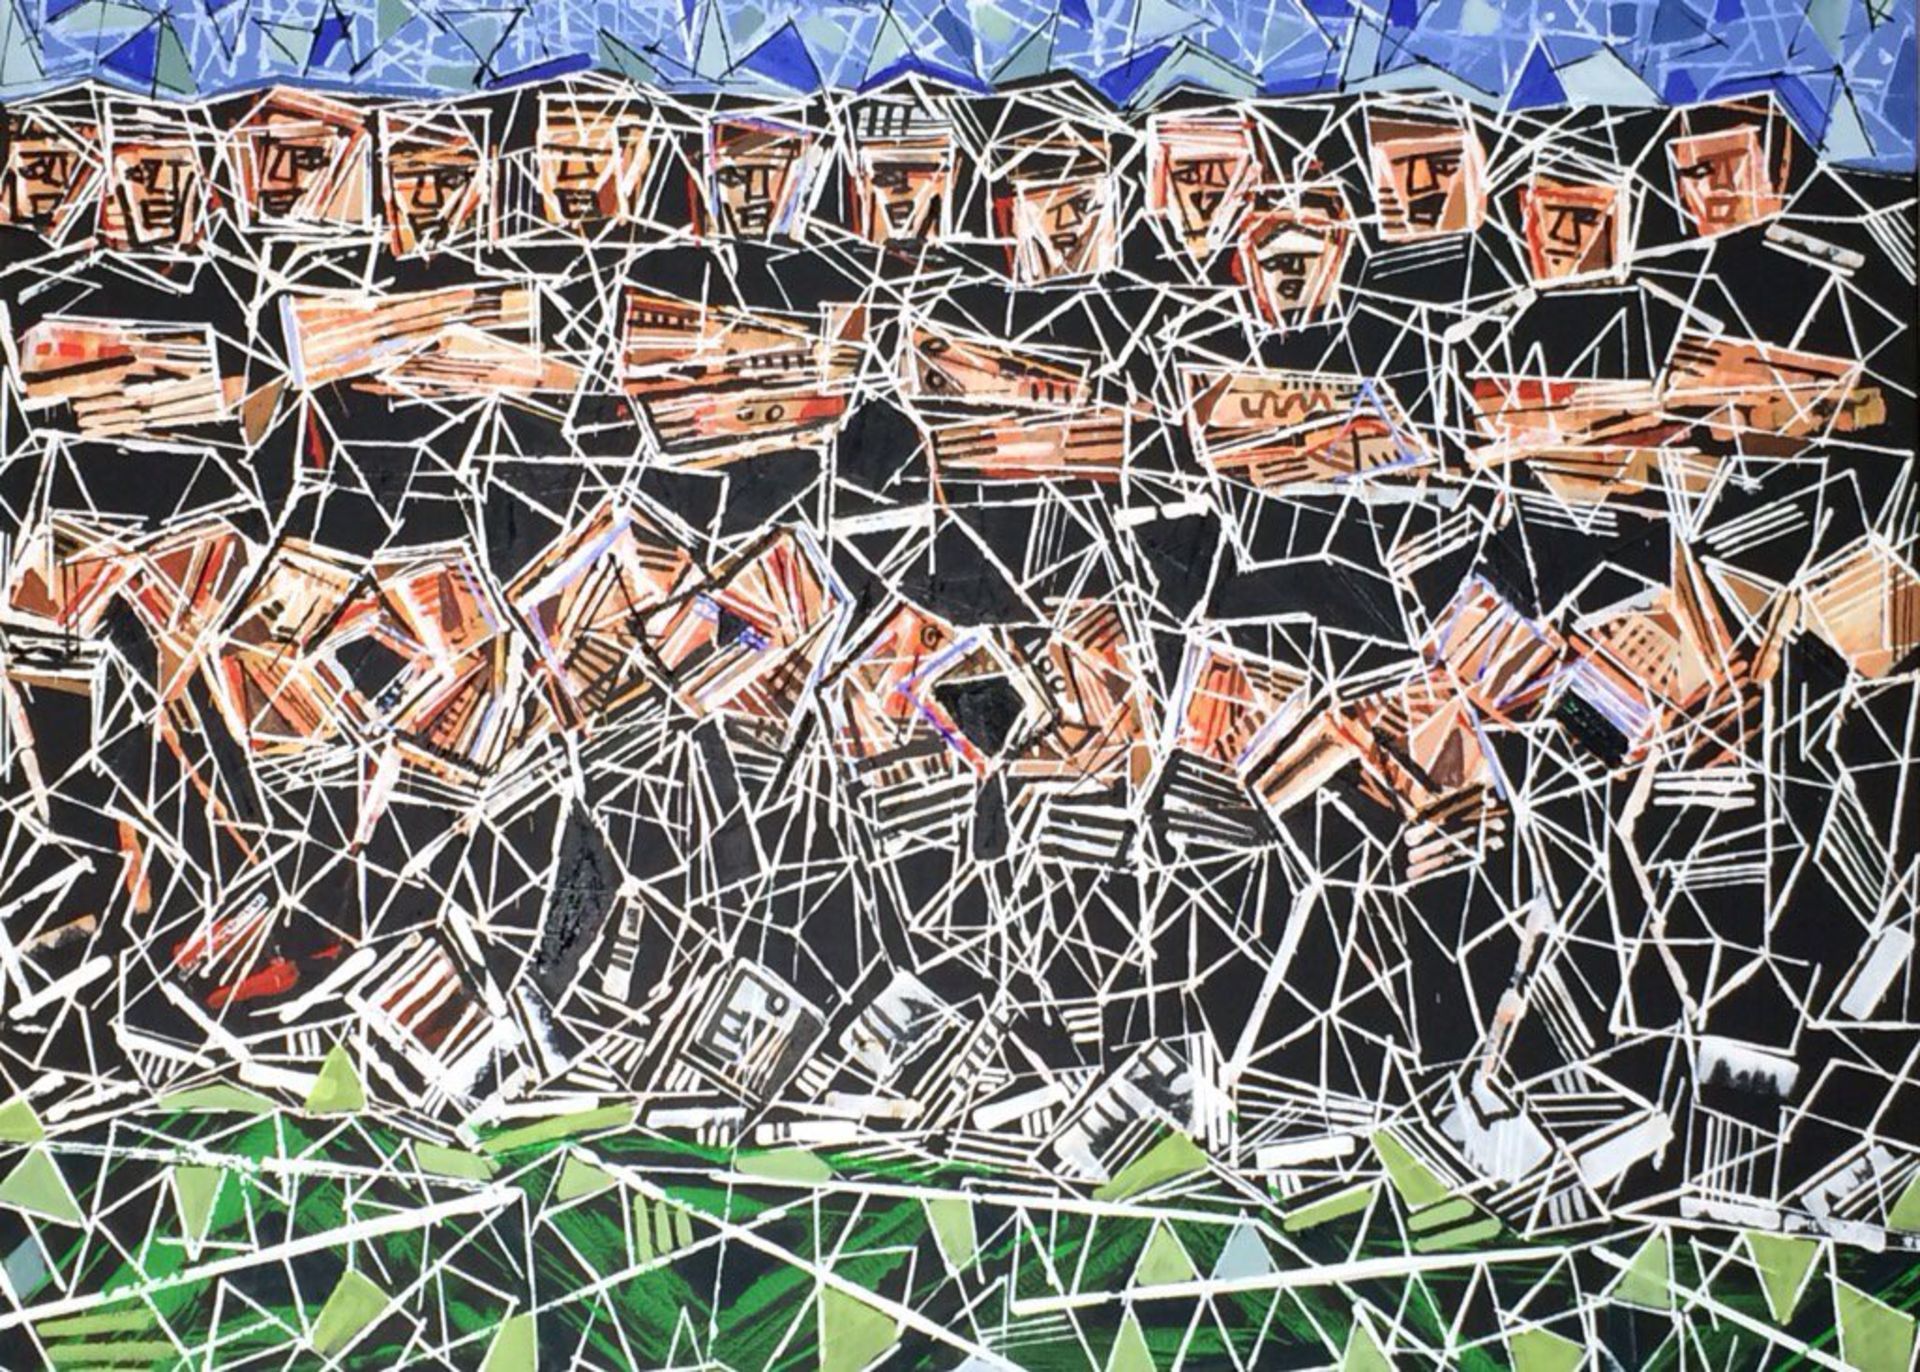 Renowned artist Ben Mosley original ‘The Haka’ painting to mark the ‘All Black’s’ winning RWC 2015